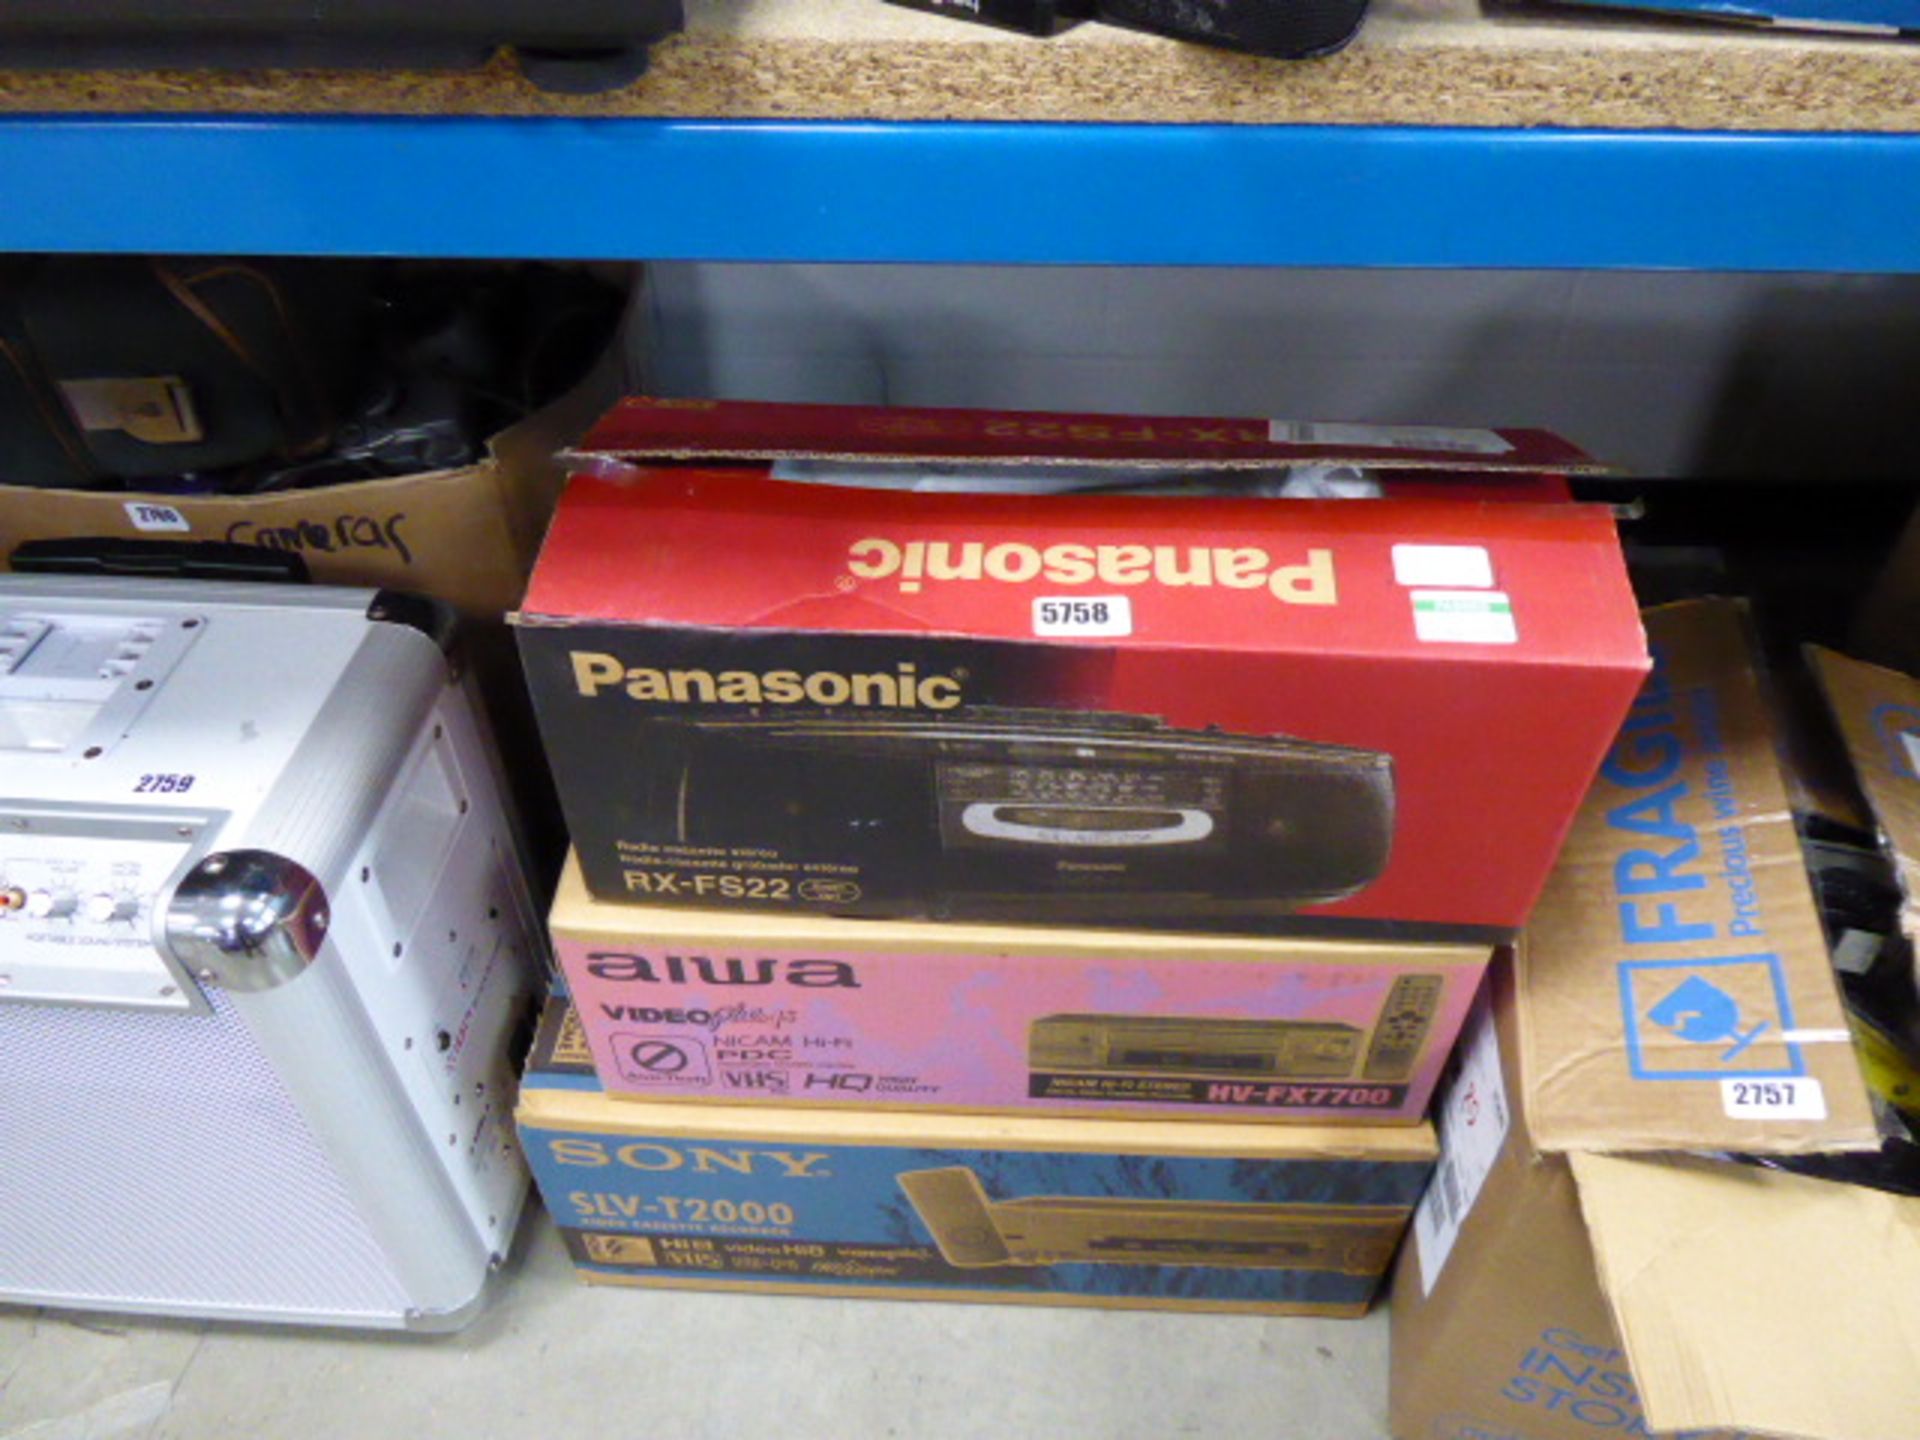 (78) Panasonic portable hifi, Aiwa video player and Sony video cassette player